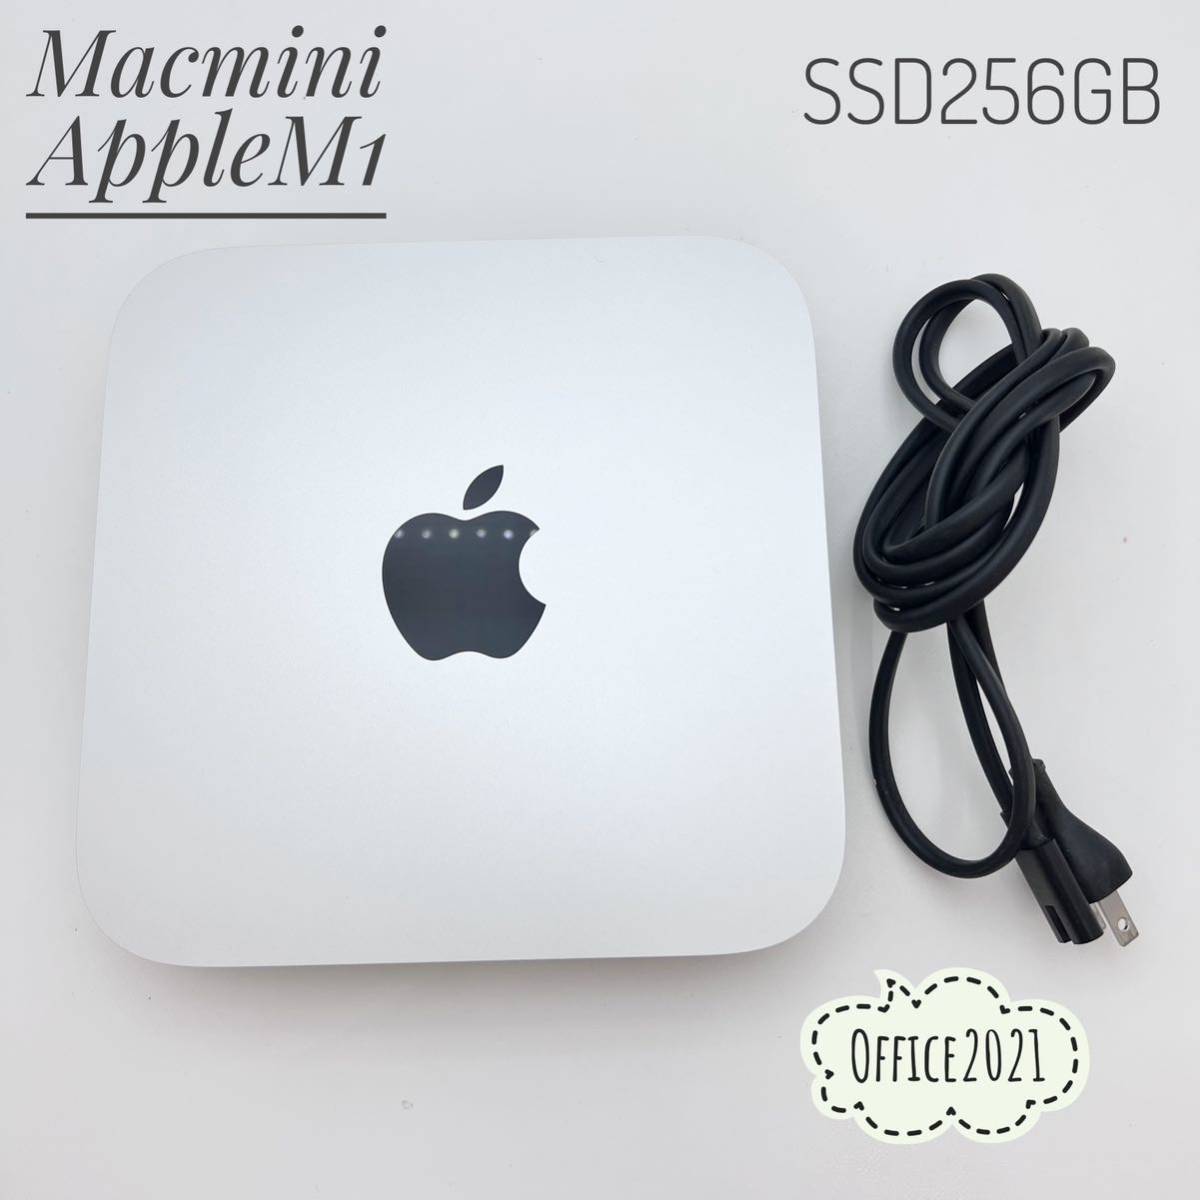 新規購入 Macmini Office2021付き SSD256GB M1 Apple Mac mini - store